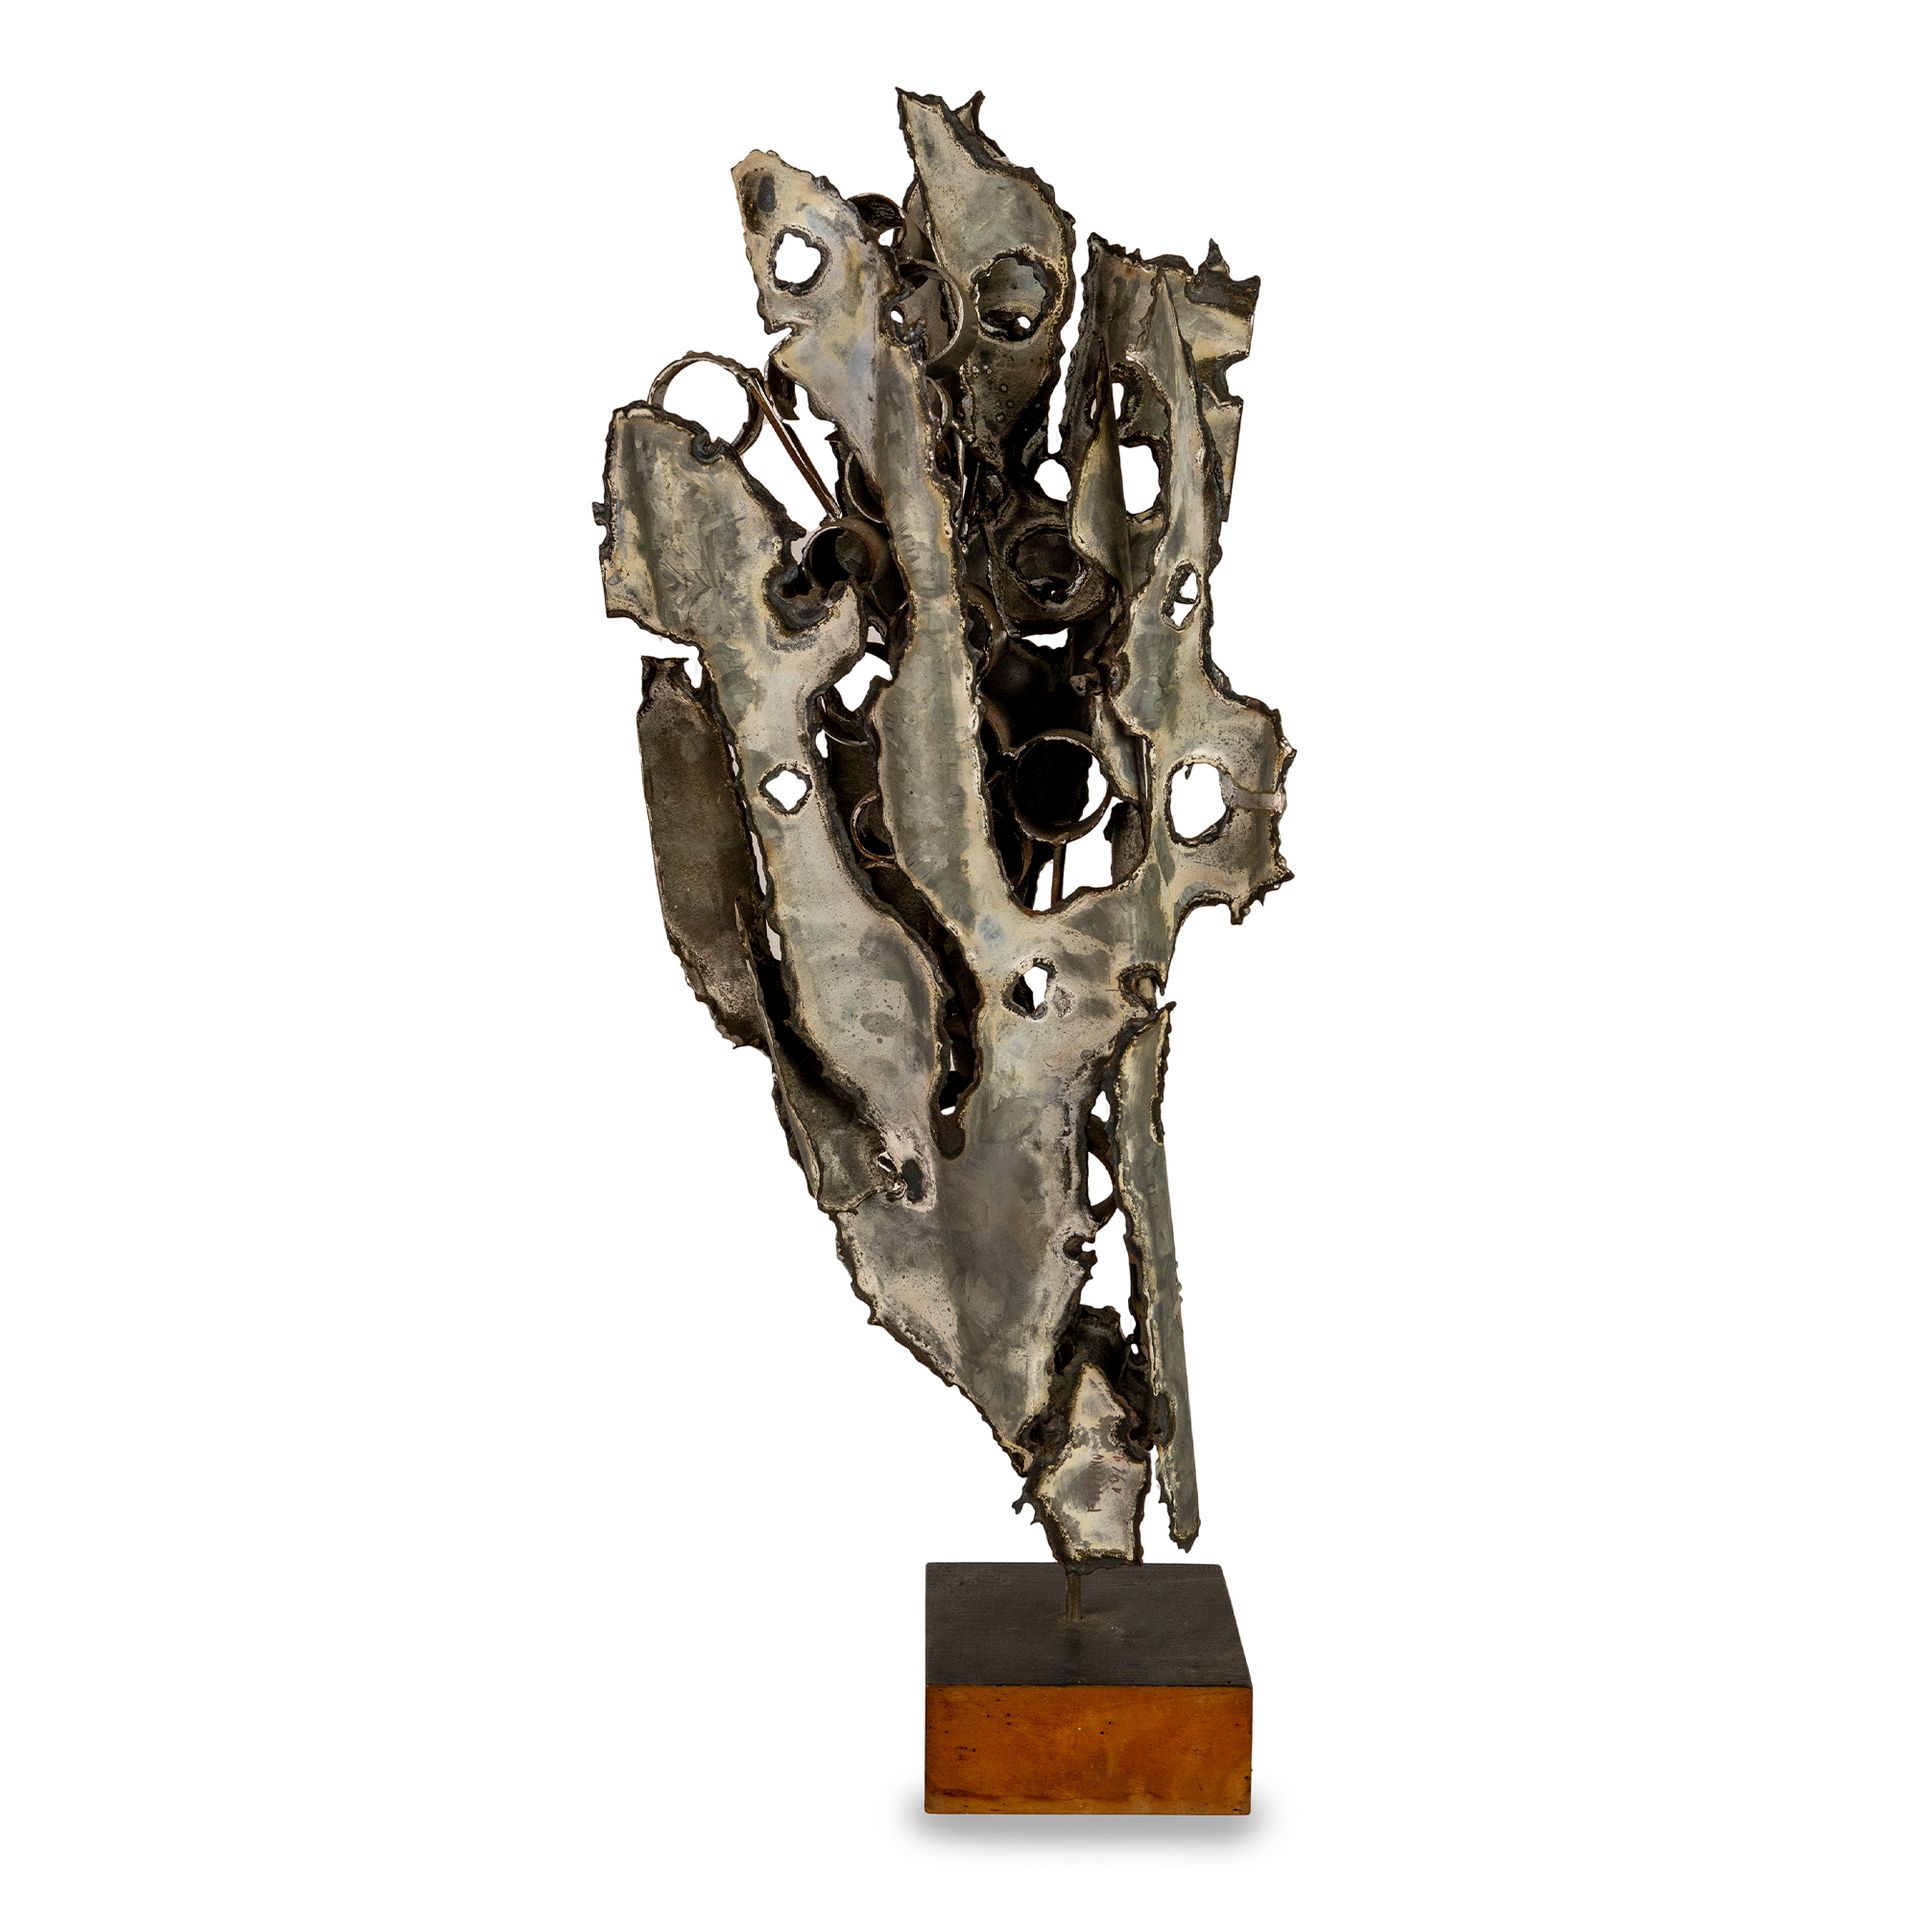 Null Fasano, 20th century sculptor 
Untitled 1969, welded metal sheet sculpture;&hellip;